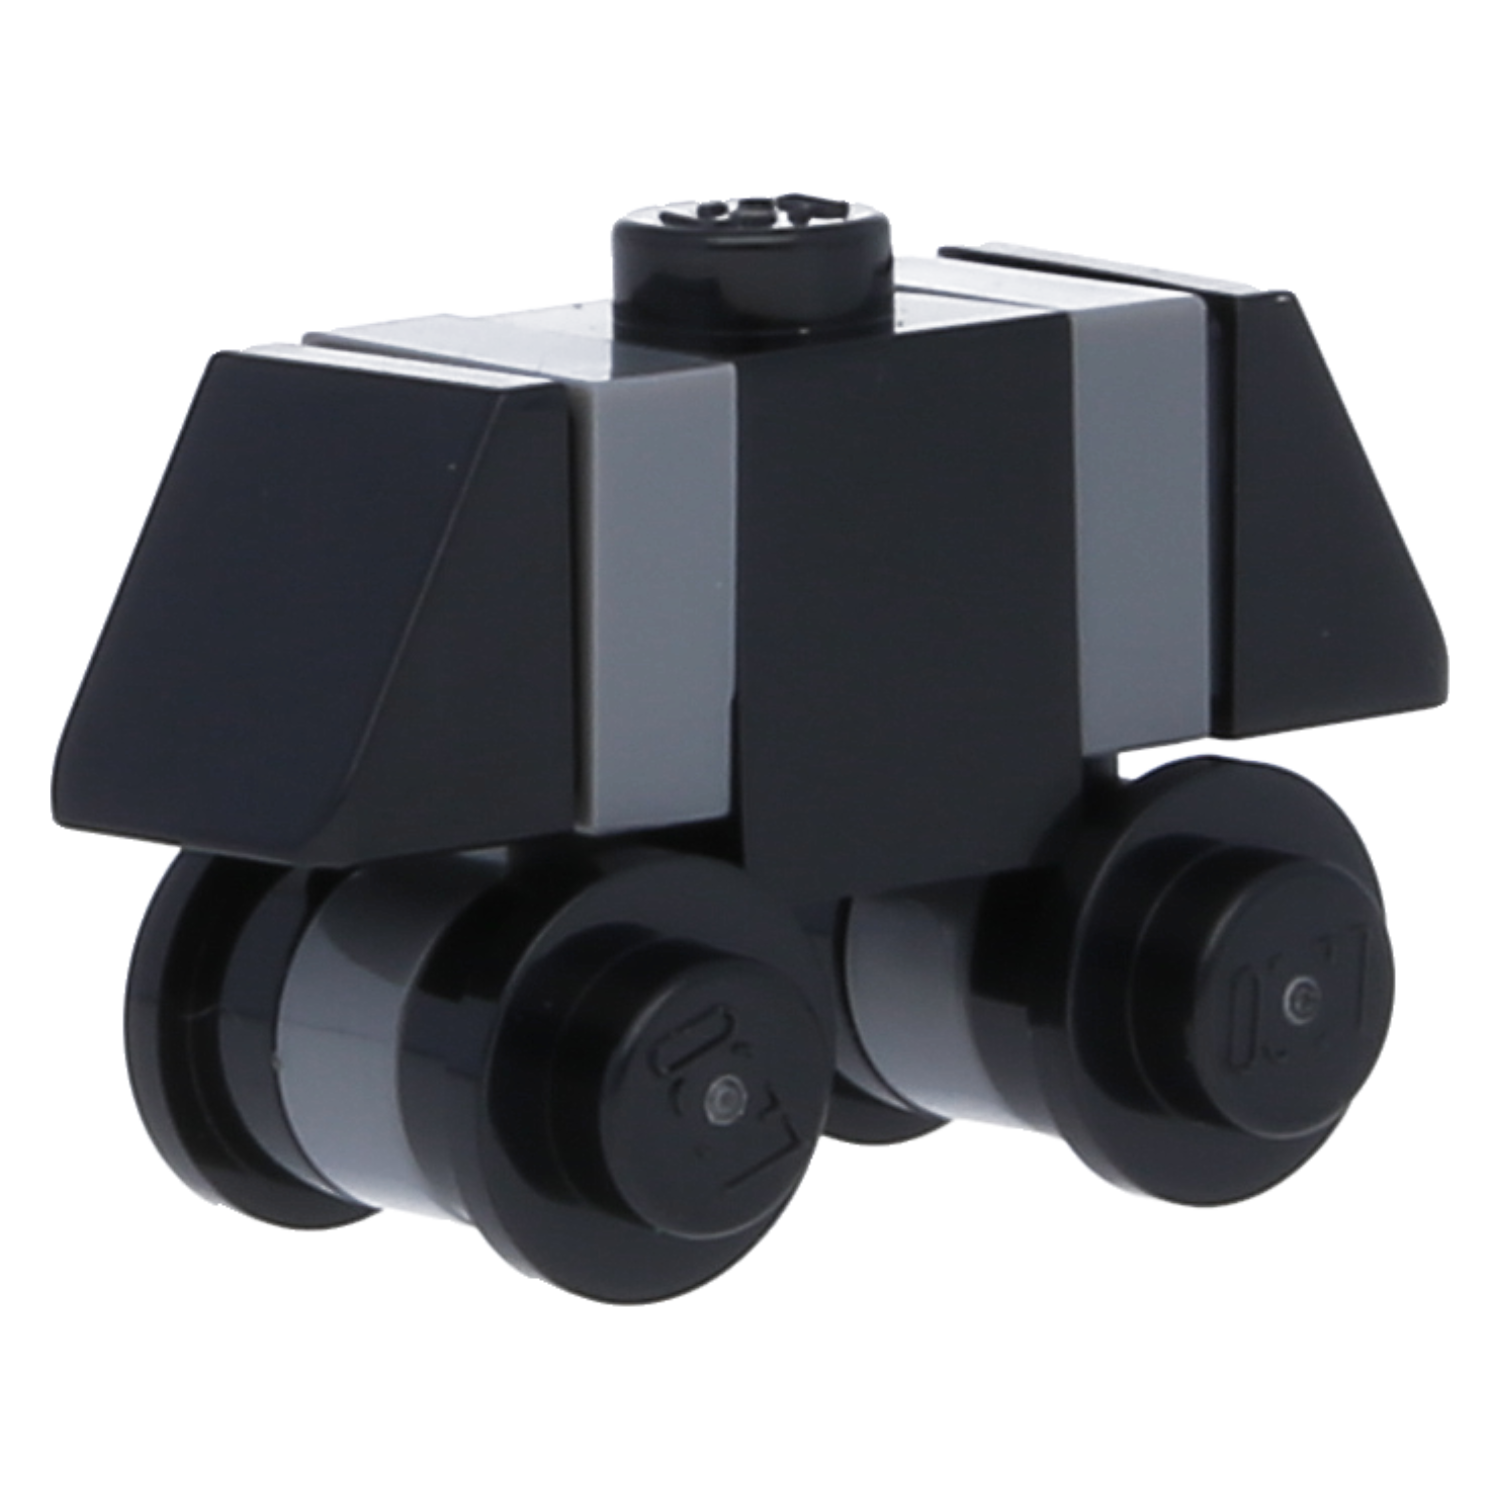 LEGO Star Wars Minifigure - Mouse Droid (Black)